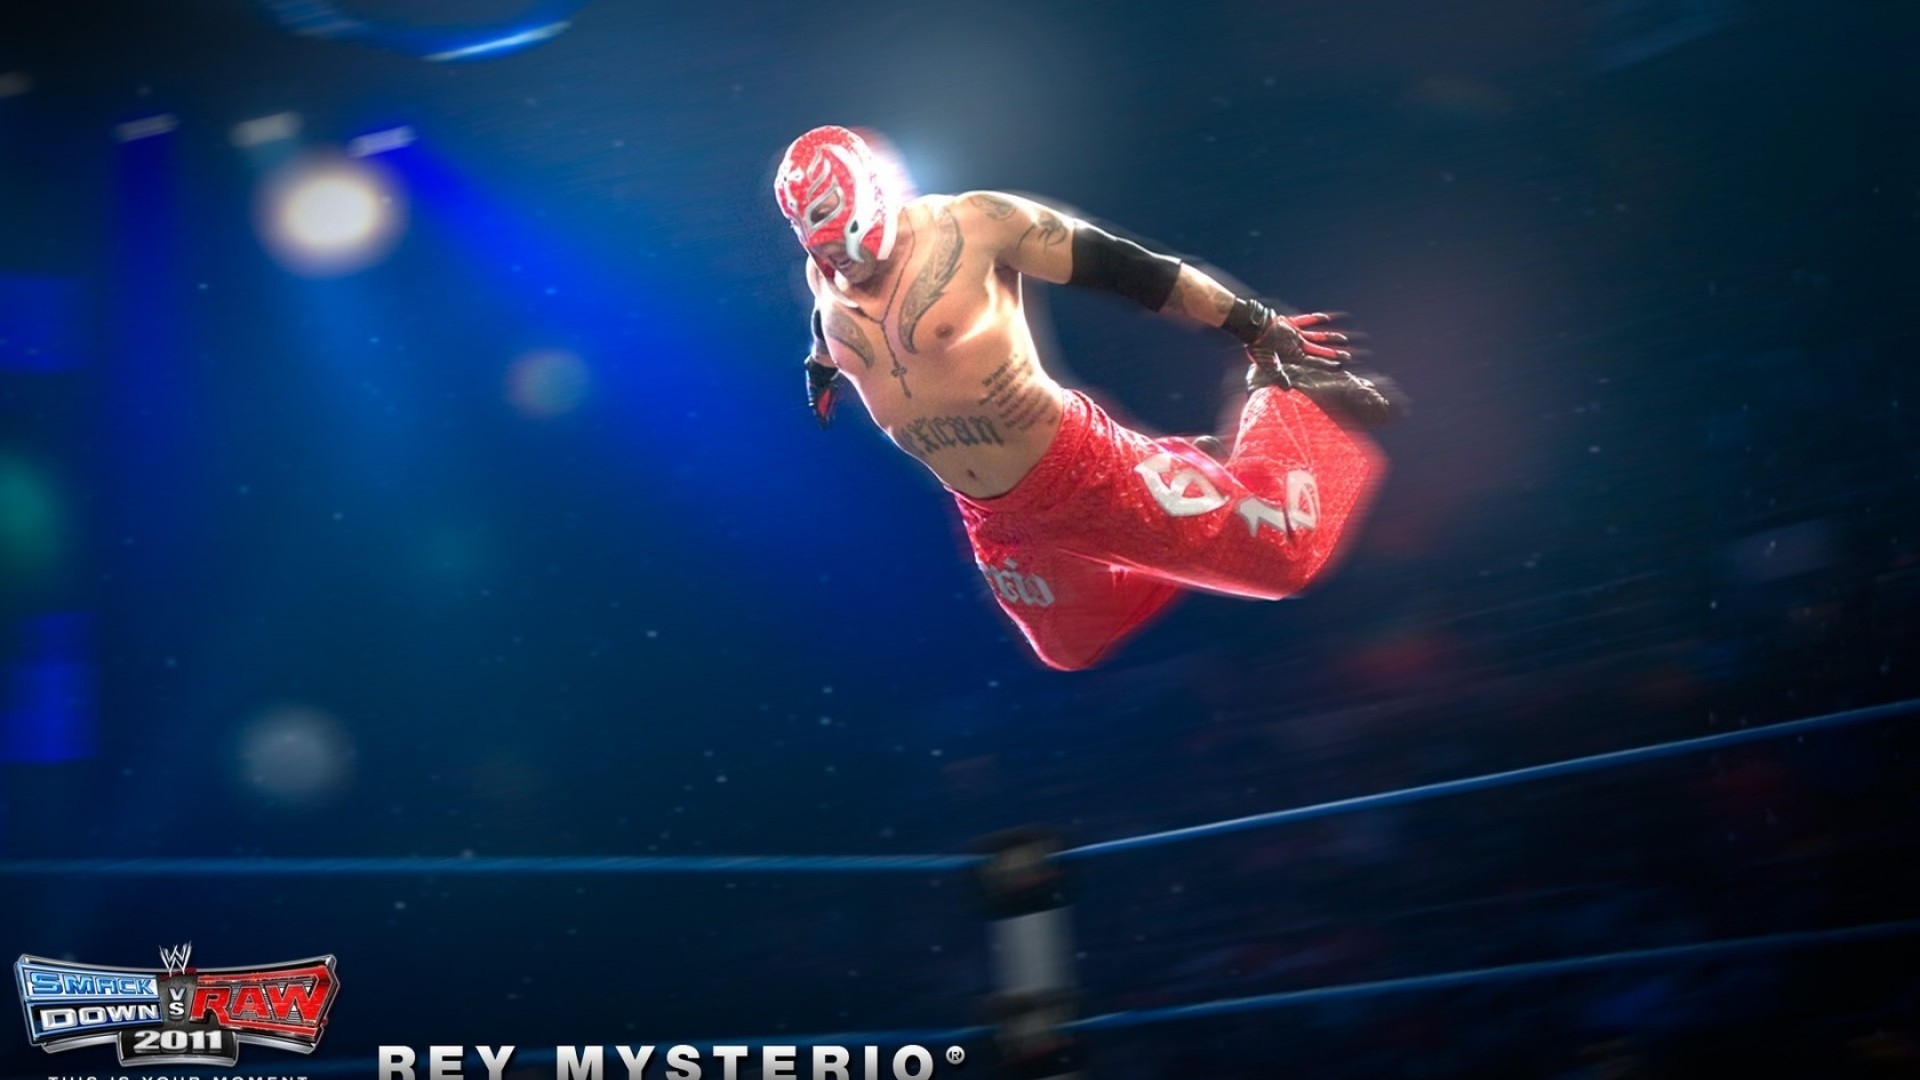 sports wrestling rey mysterio wwe smackdown vs raw 2011 wwe smackdown vs raw 1920x1080 wallpaper